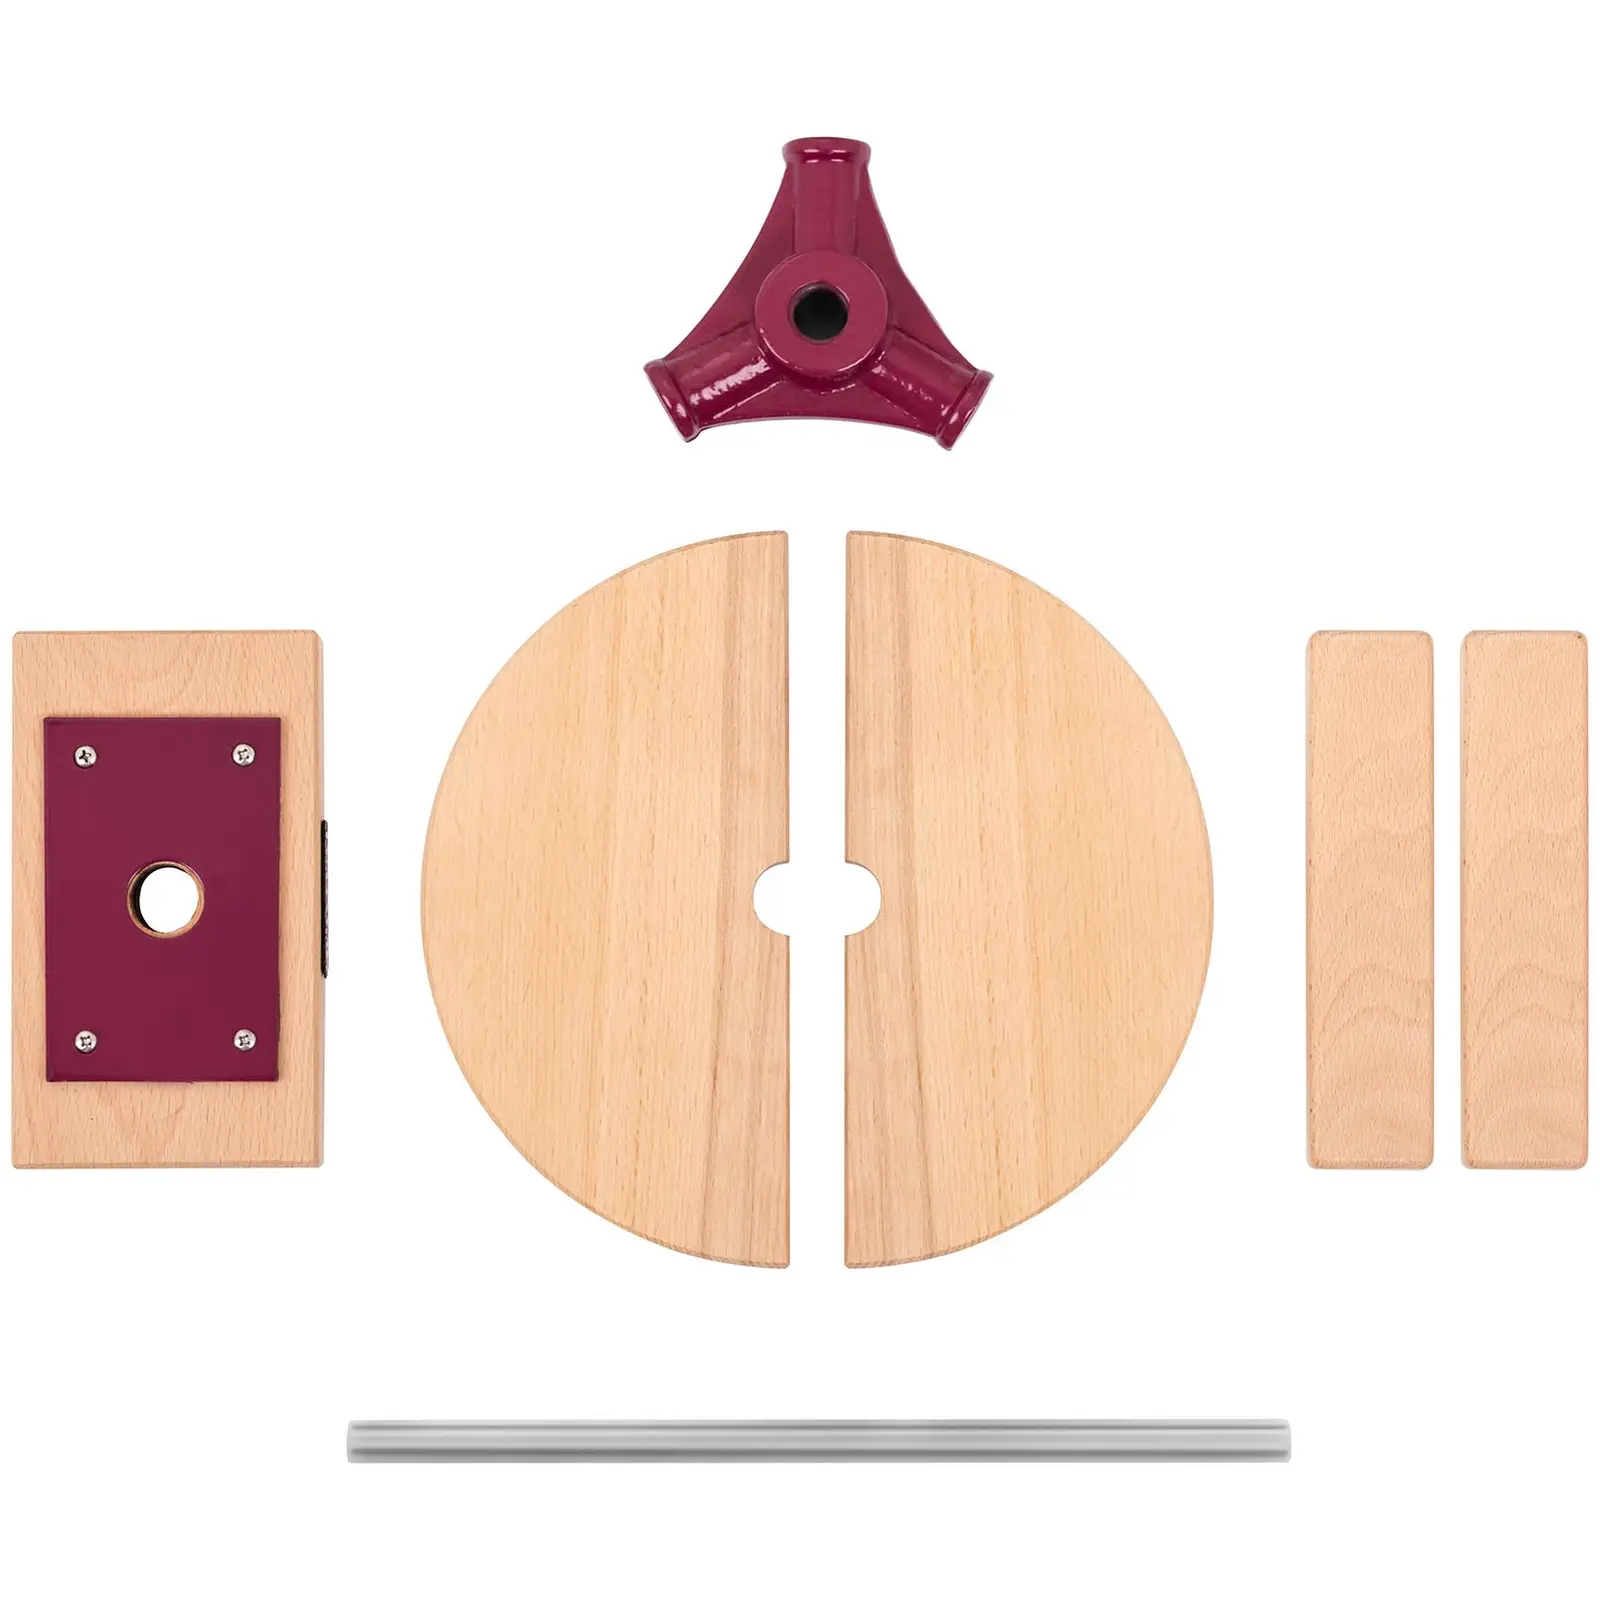 Fruit Press - manual - wooden - 12 L - incl. wooden blocks, pressure plate and pressing cloth